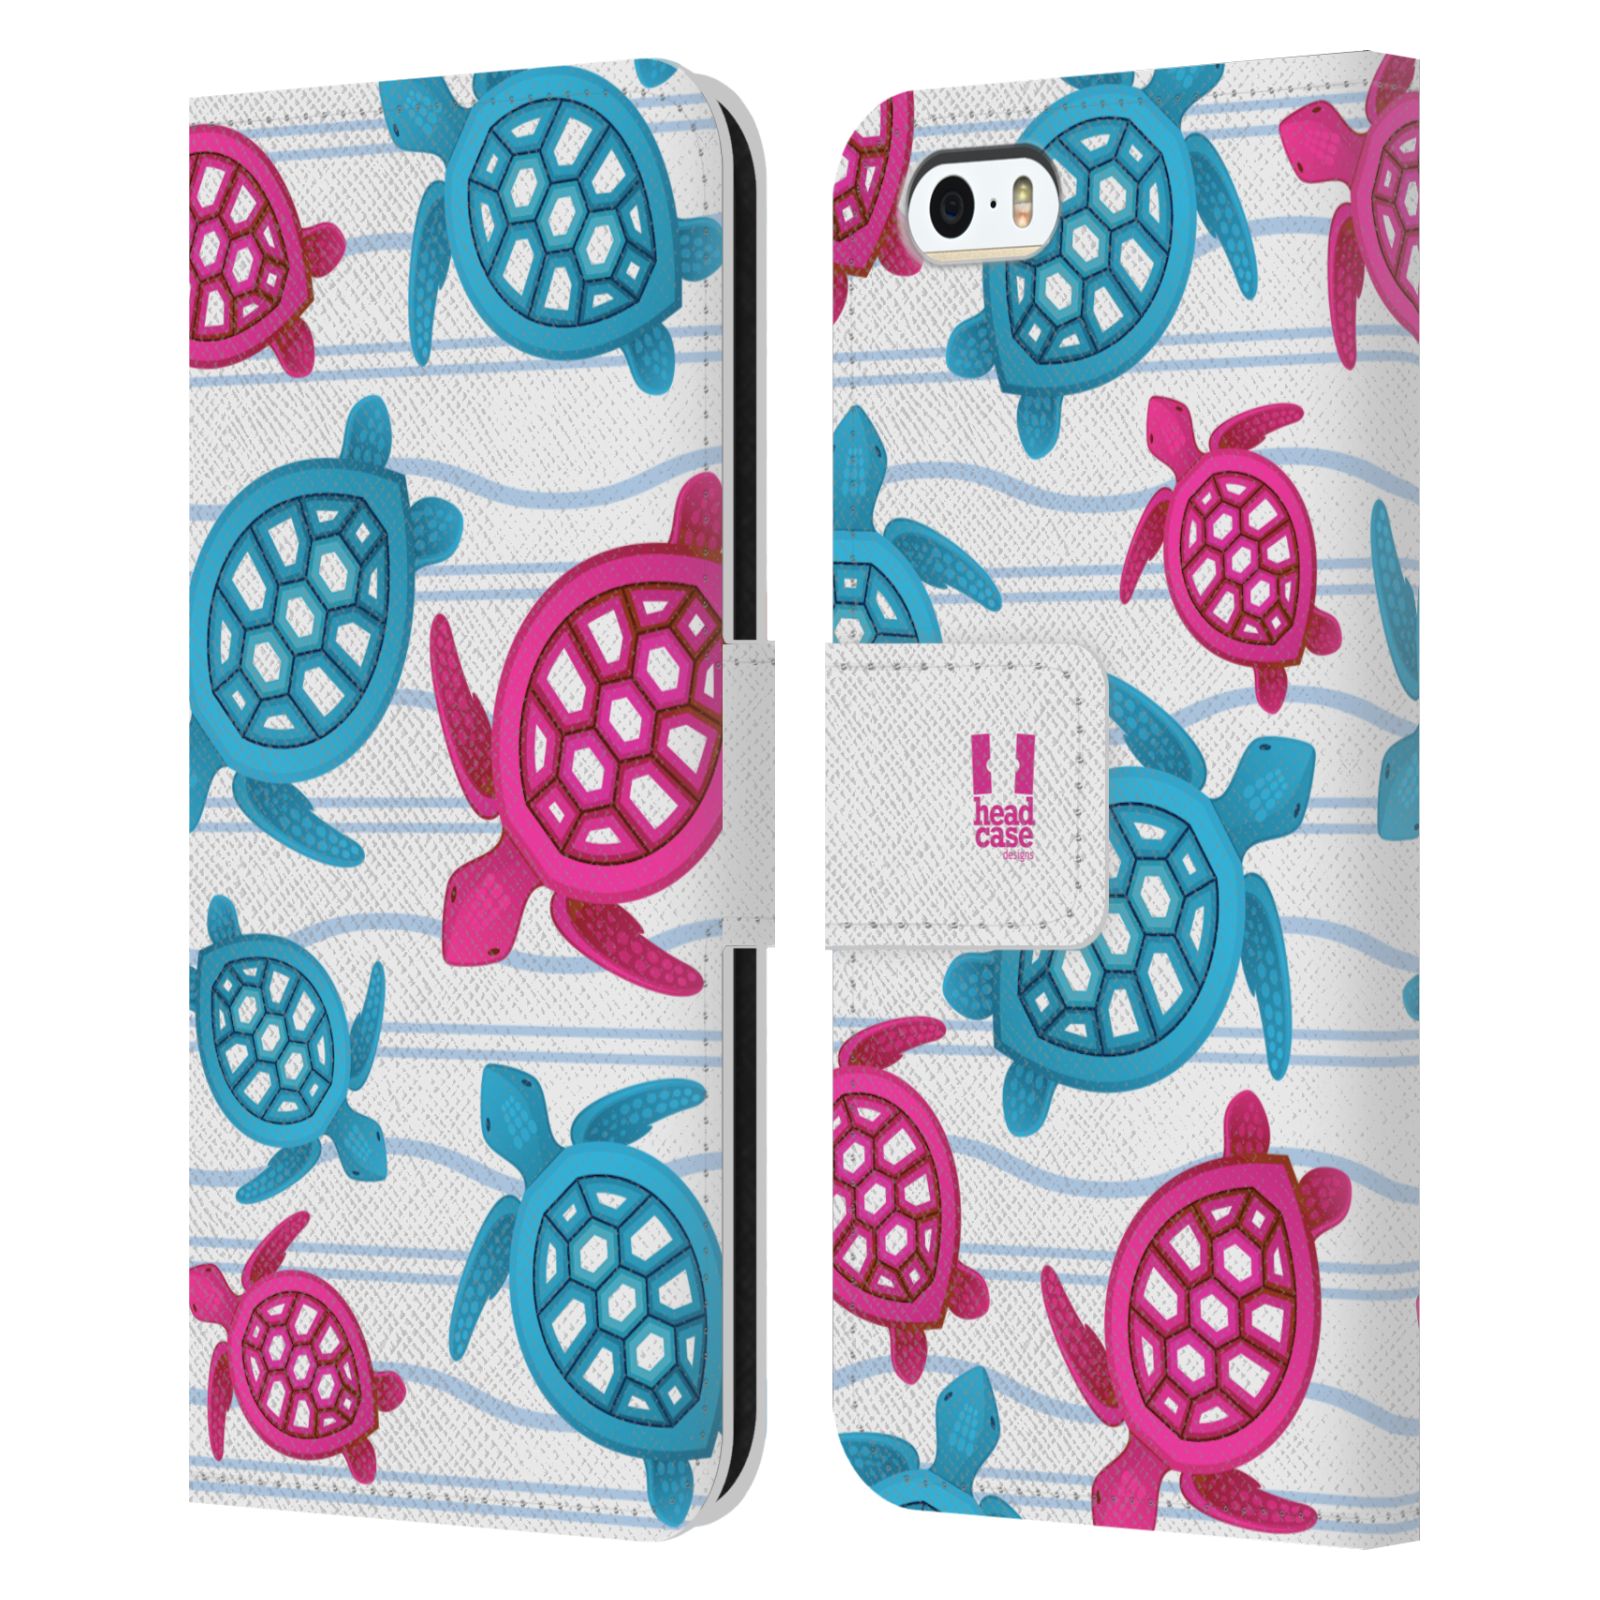 Pouzdro pro mobil Apple Iphone 5 / 5S / SE 2015 - Mořský vzor - barevné želvičky